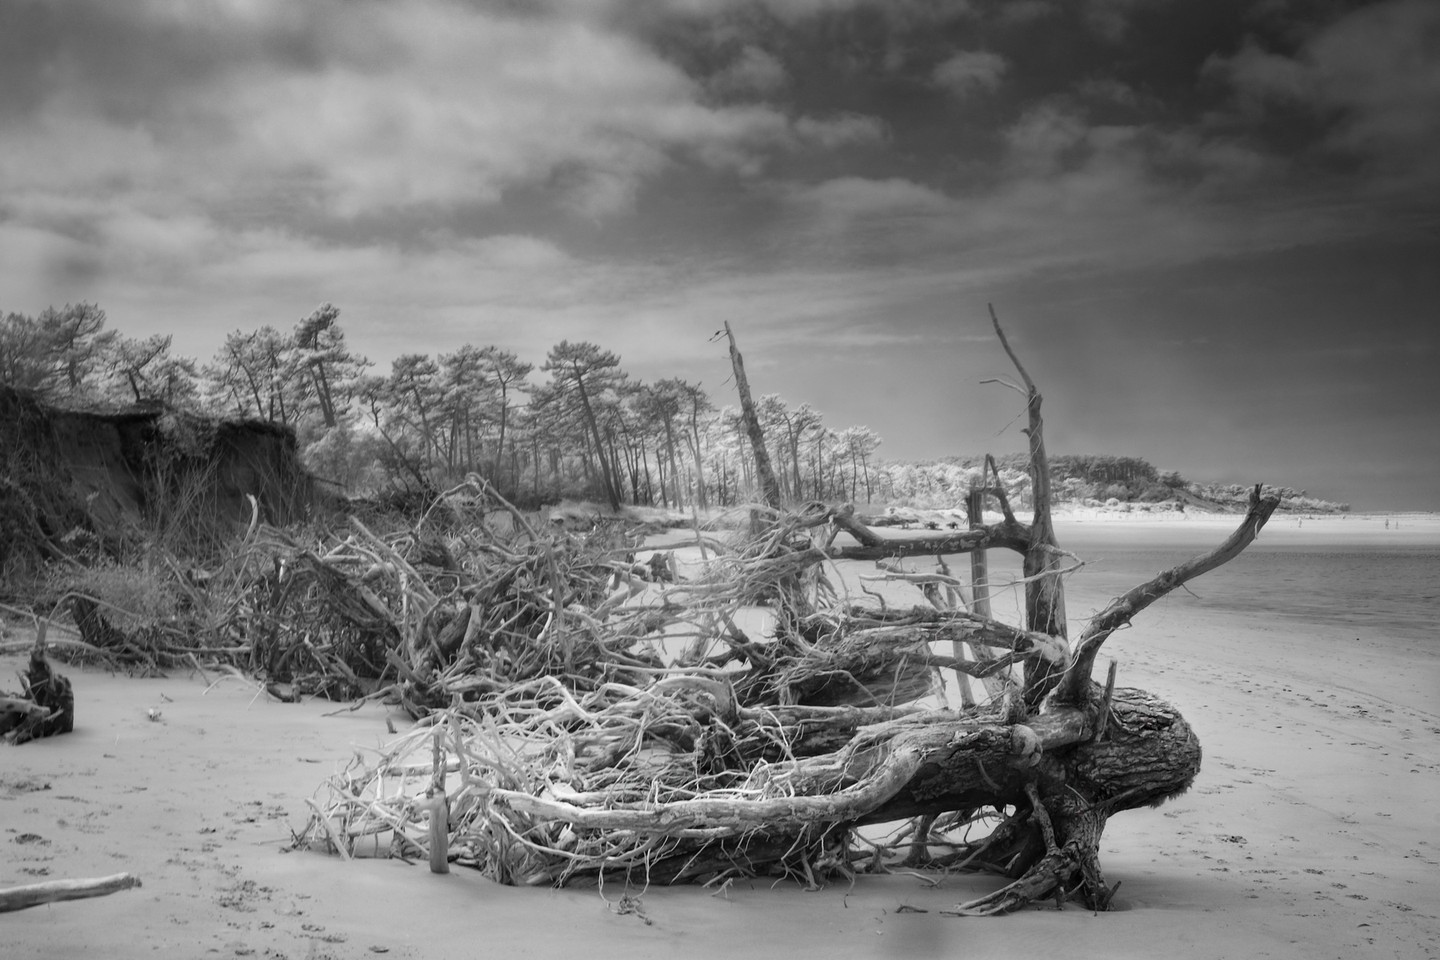 #Fujifilm #XE2 #blackandwhitephotography #fujifilm #ir #infrared #infrared_photography #infraredphotography #infrared_images #creativeir #irphotography #ig_infrared #infraredworld #infraredphoto #infraredcamera #irphoto #irfilter #convertedcamera #irphotography #lifepixelinfrared #beach #wood